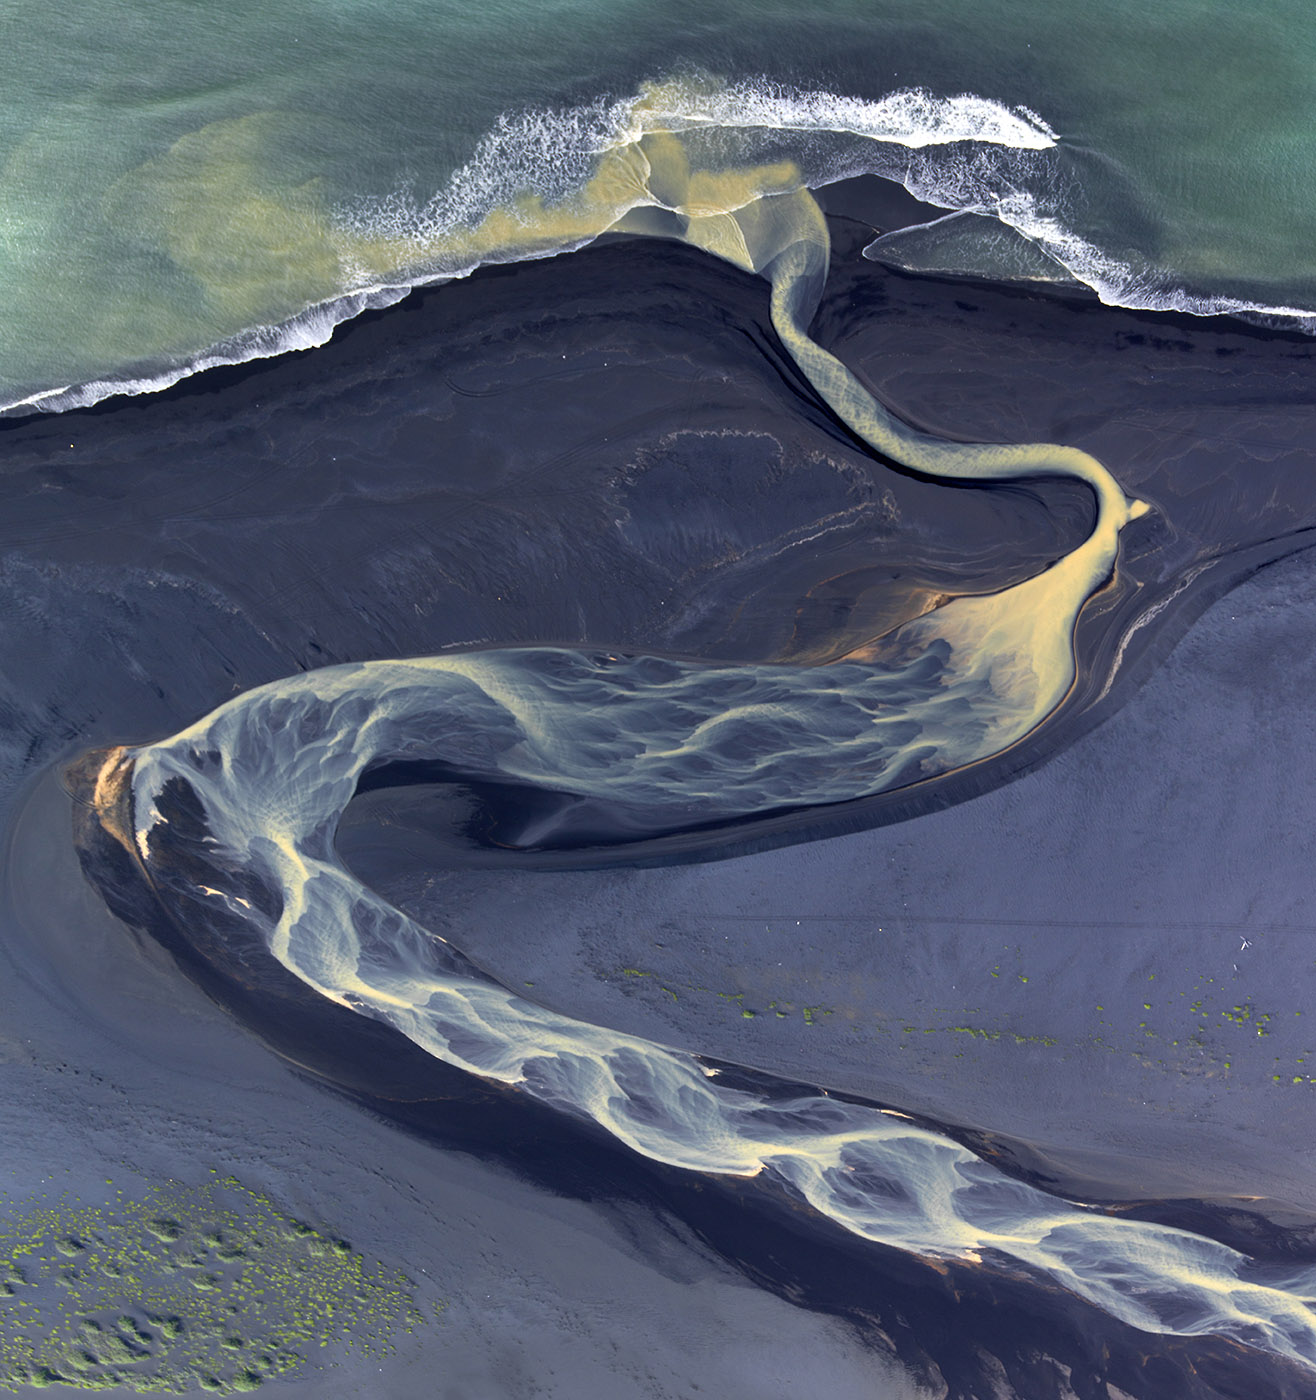 An Icelandic river reaching the ocean